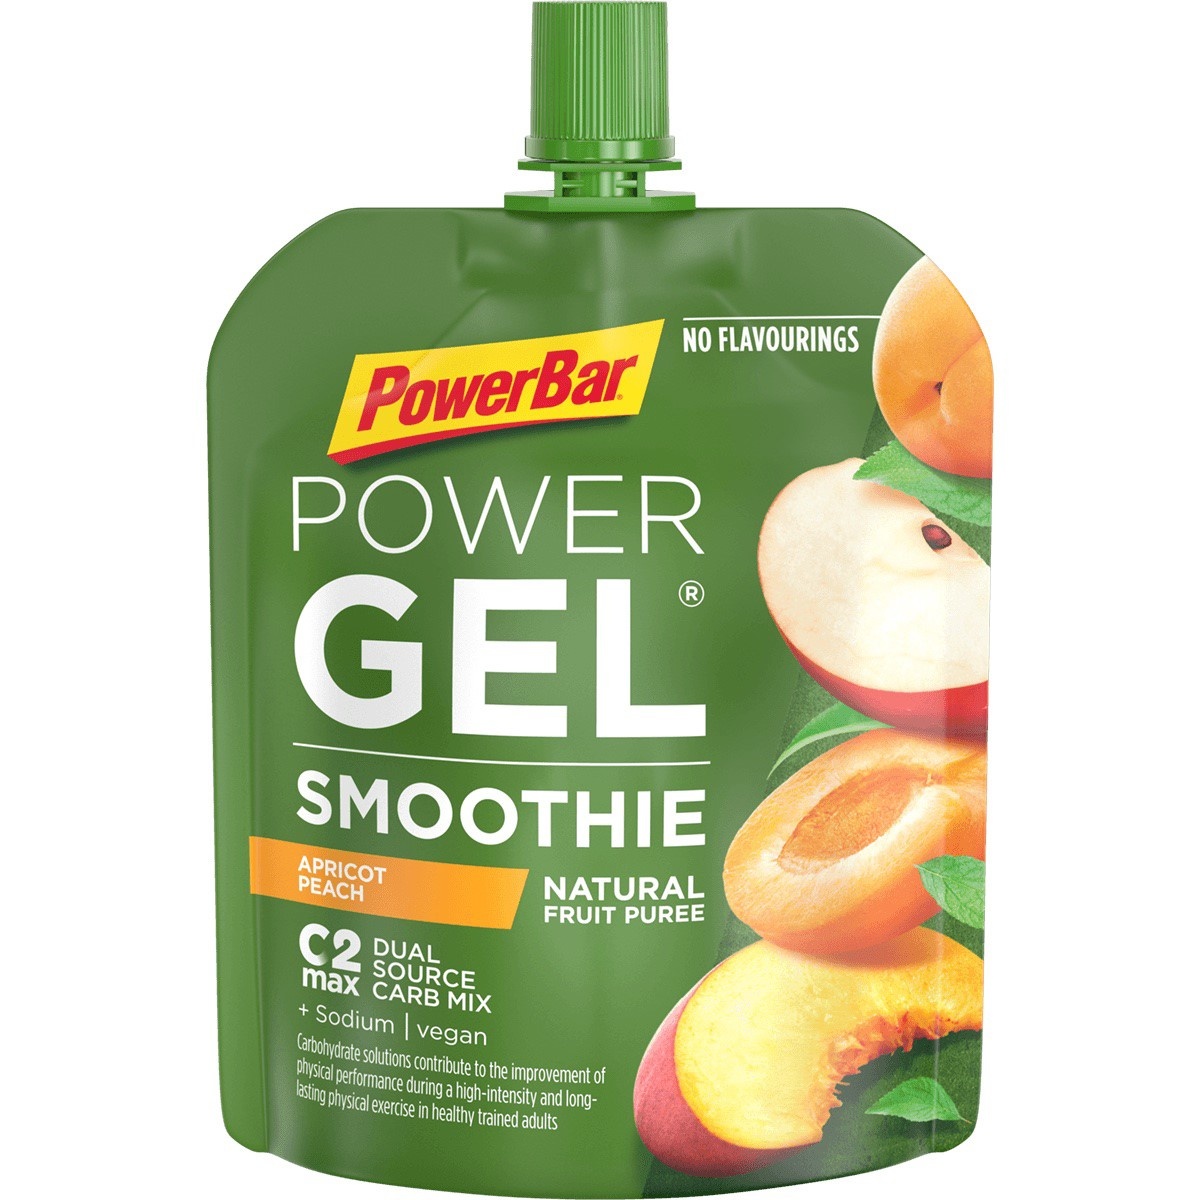 Billede af Powerbar PowerGel Smoothie - Apricot Peach (90g)